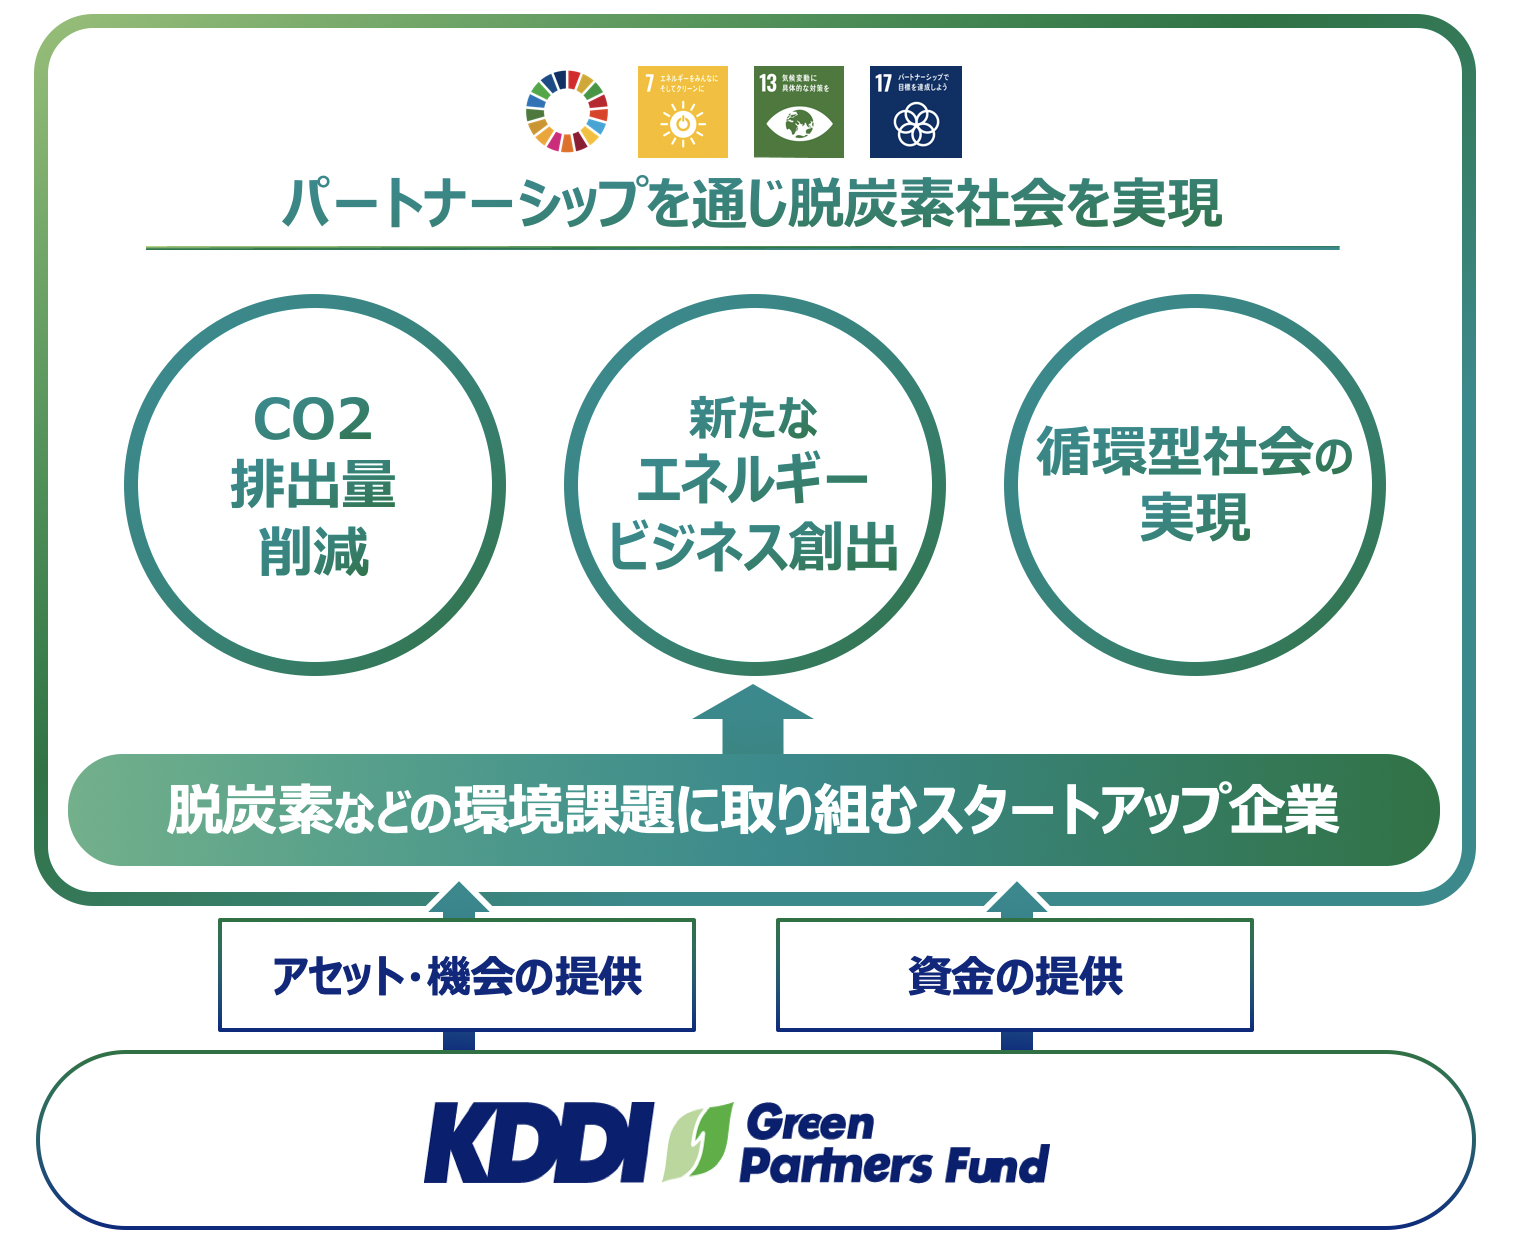 KDDI Green Partners Fund